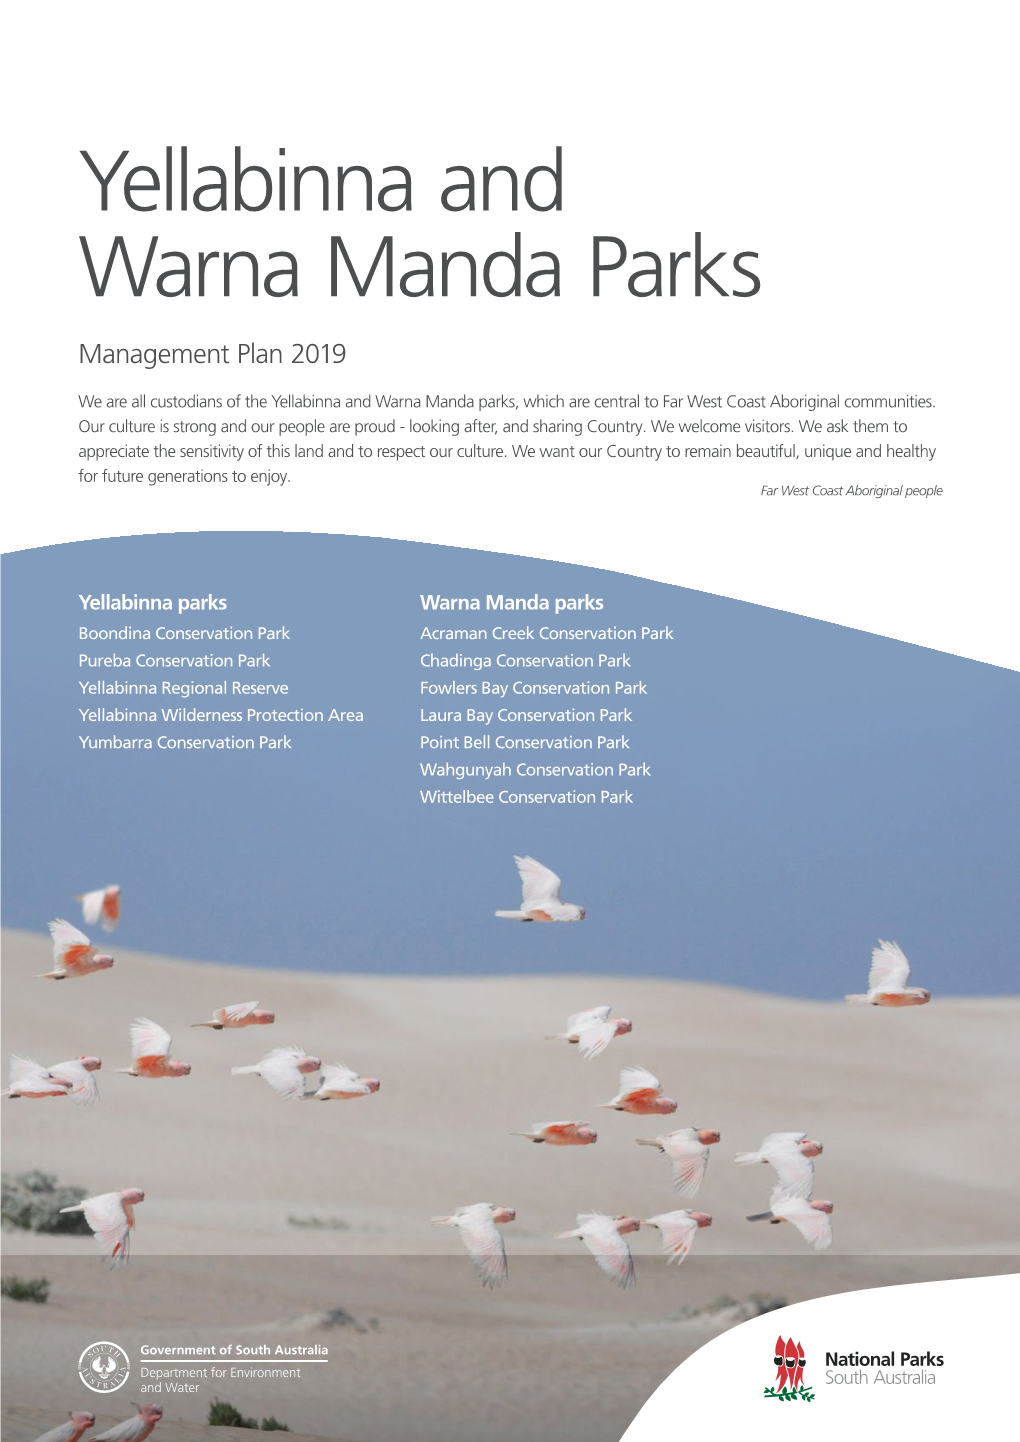 Yellabinna and Warna Manda Parks Management Plan 2019